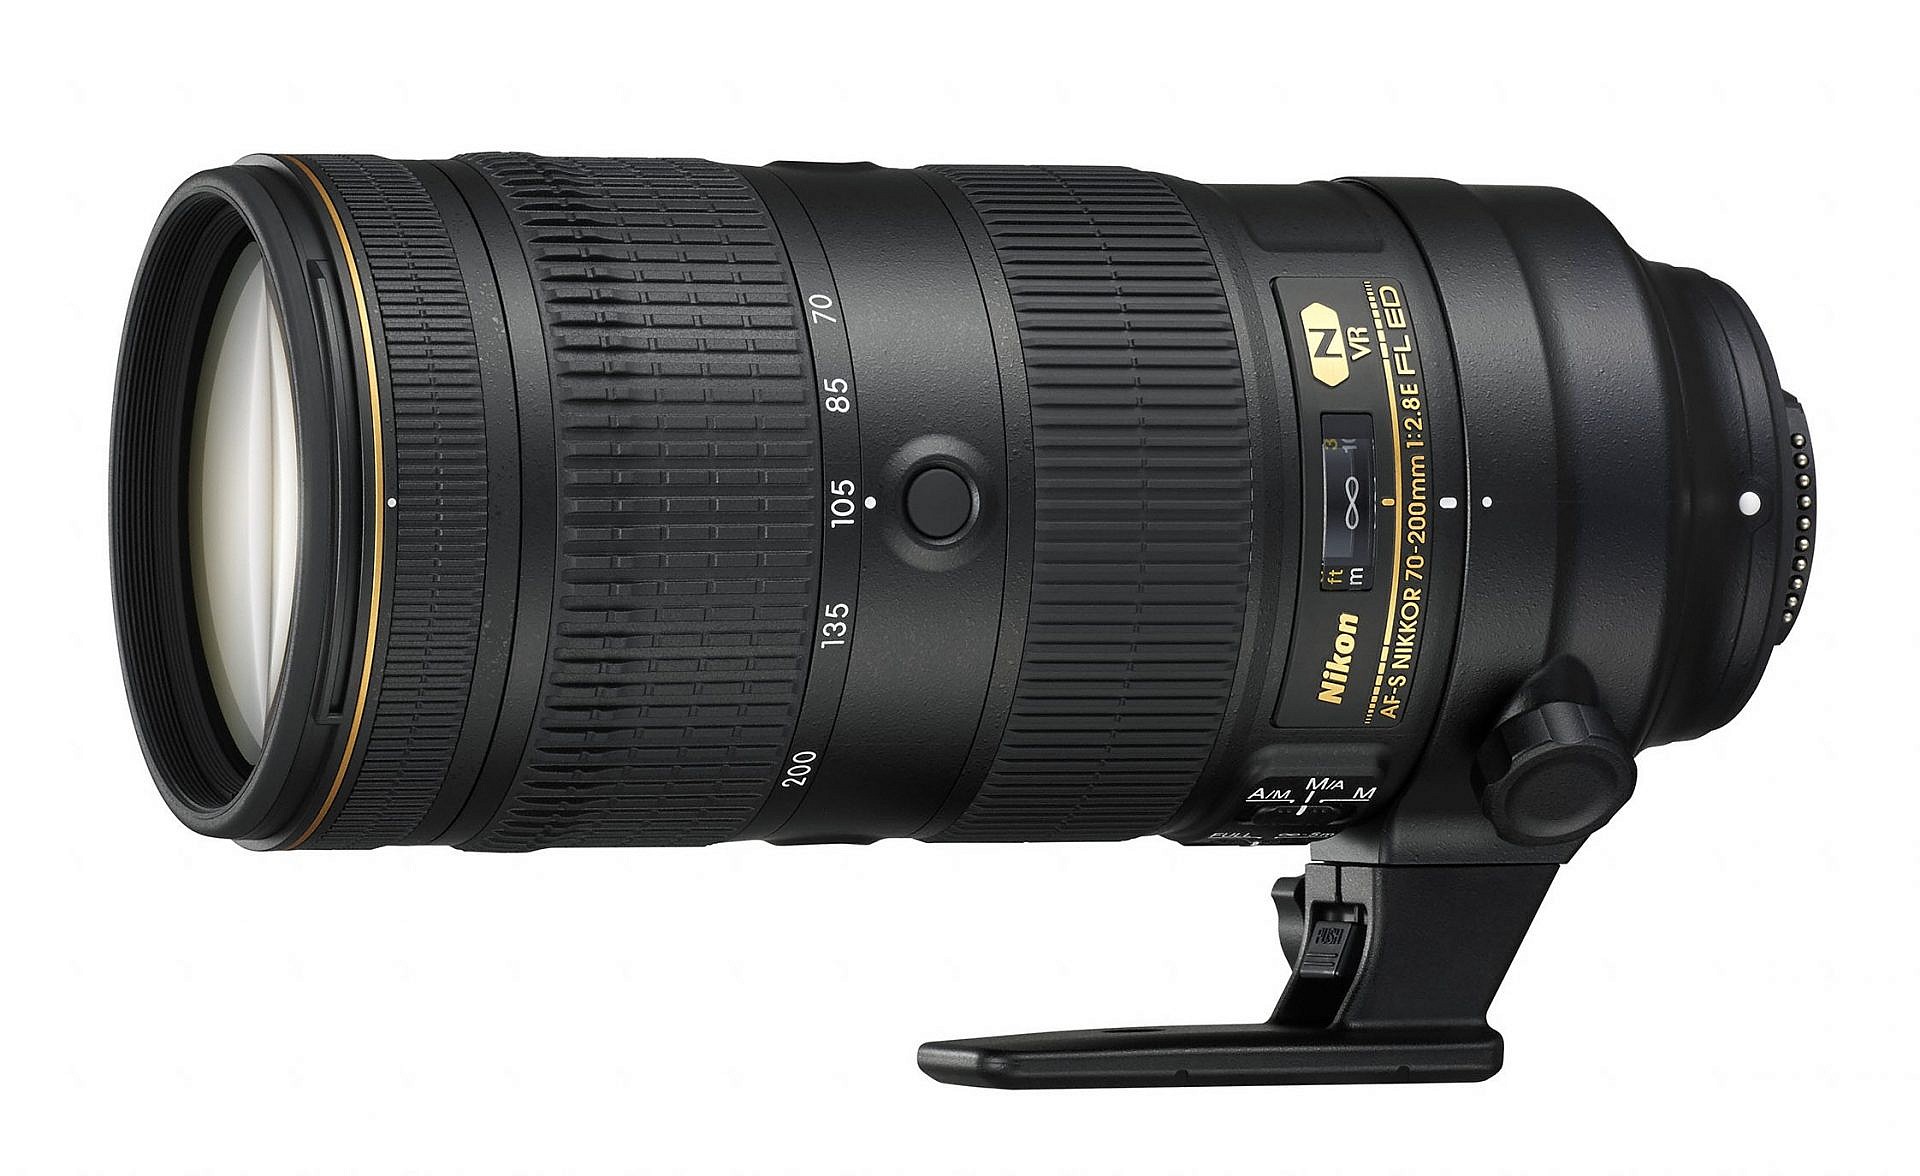 Nikon เปิดตัวเลนส์ 70-200mm f/2.8 และ PC NIKKOR 19mm f/4E ED